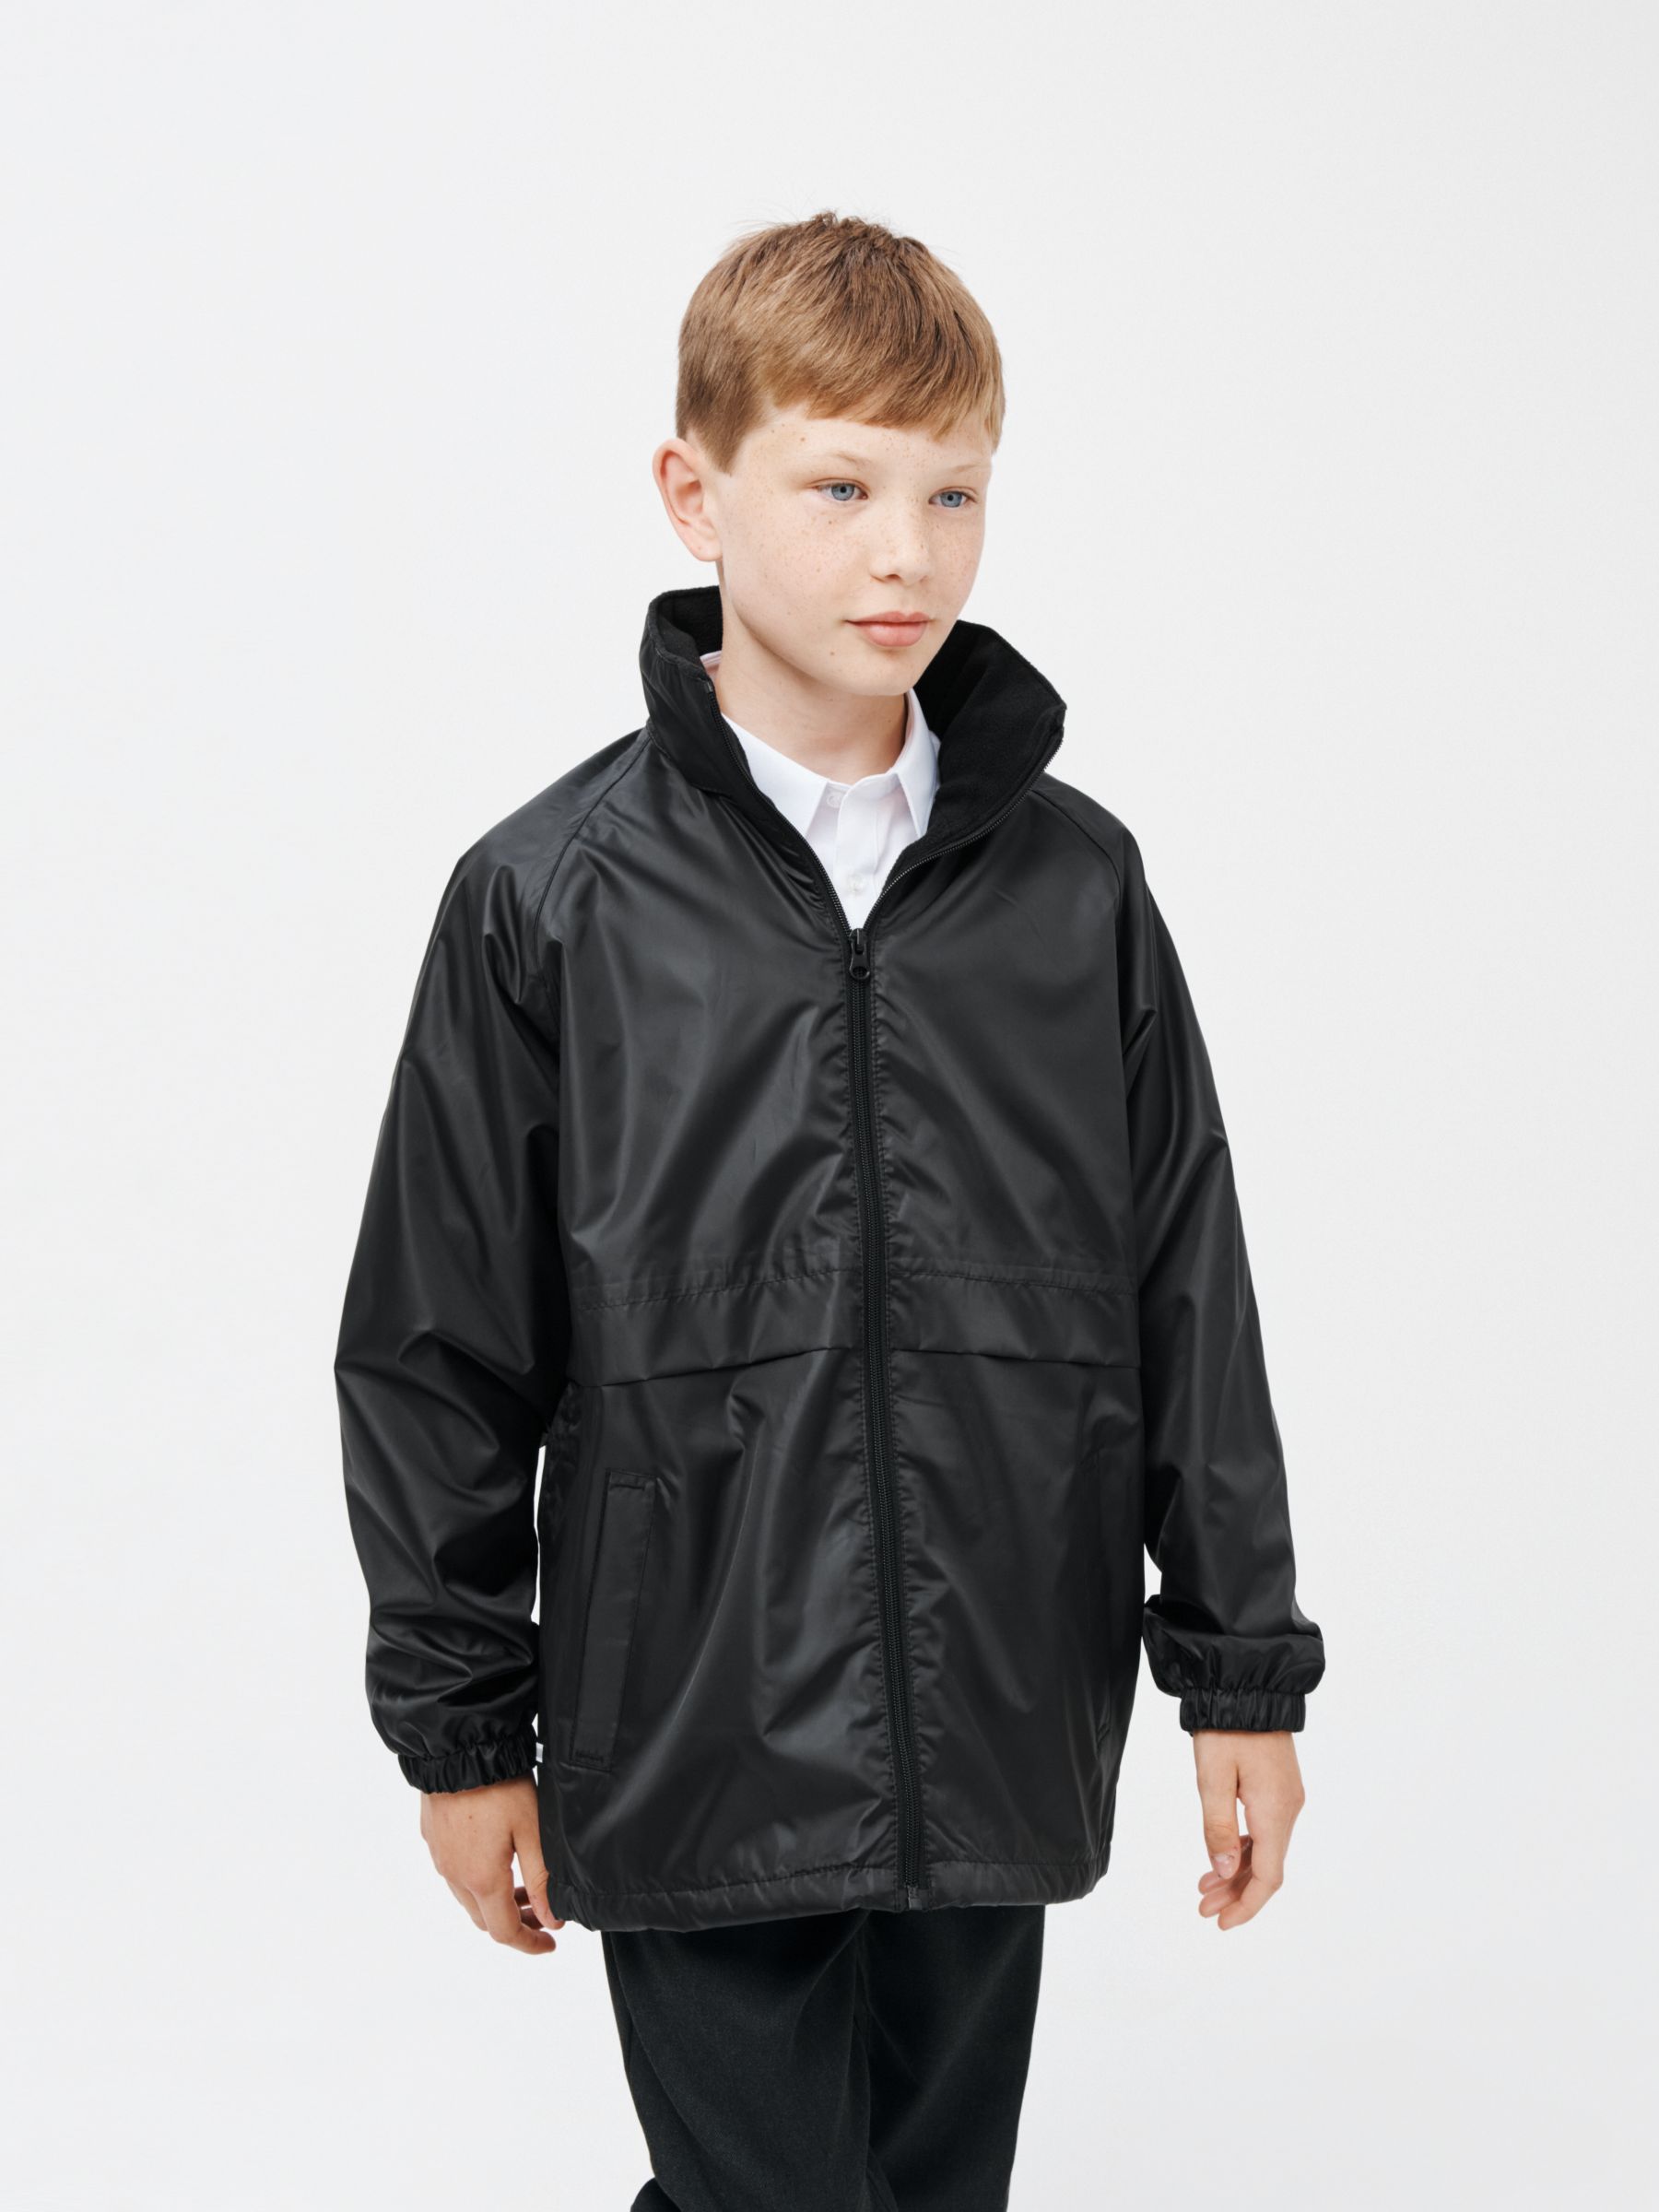 School Microfleece Lined Windproof Waterproof Jacket, Black, 5-6 years